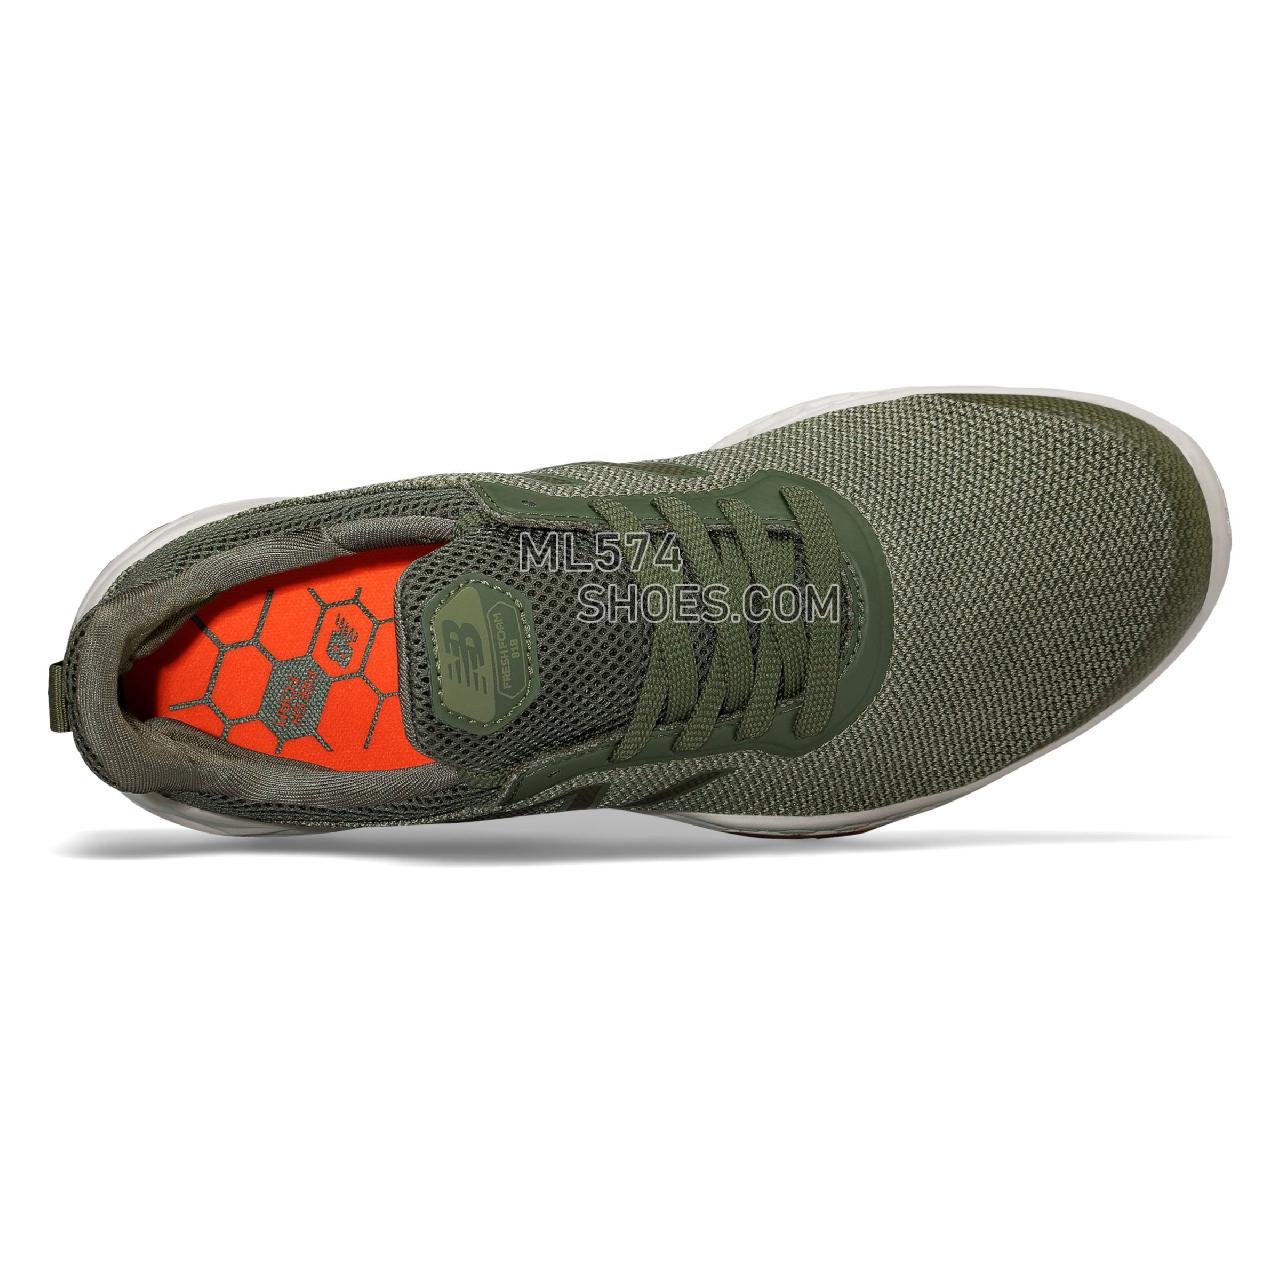 New Balance Fresh Foam 818v3 - Men's 818 - X-training Dark Covert Green with Silver Mint - MX818SG3